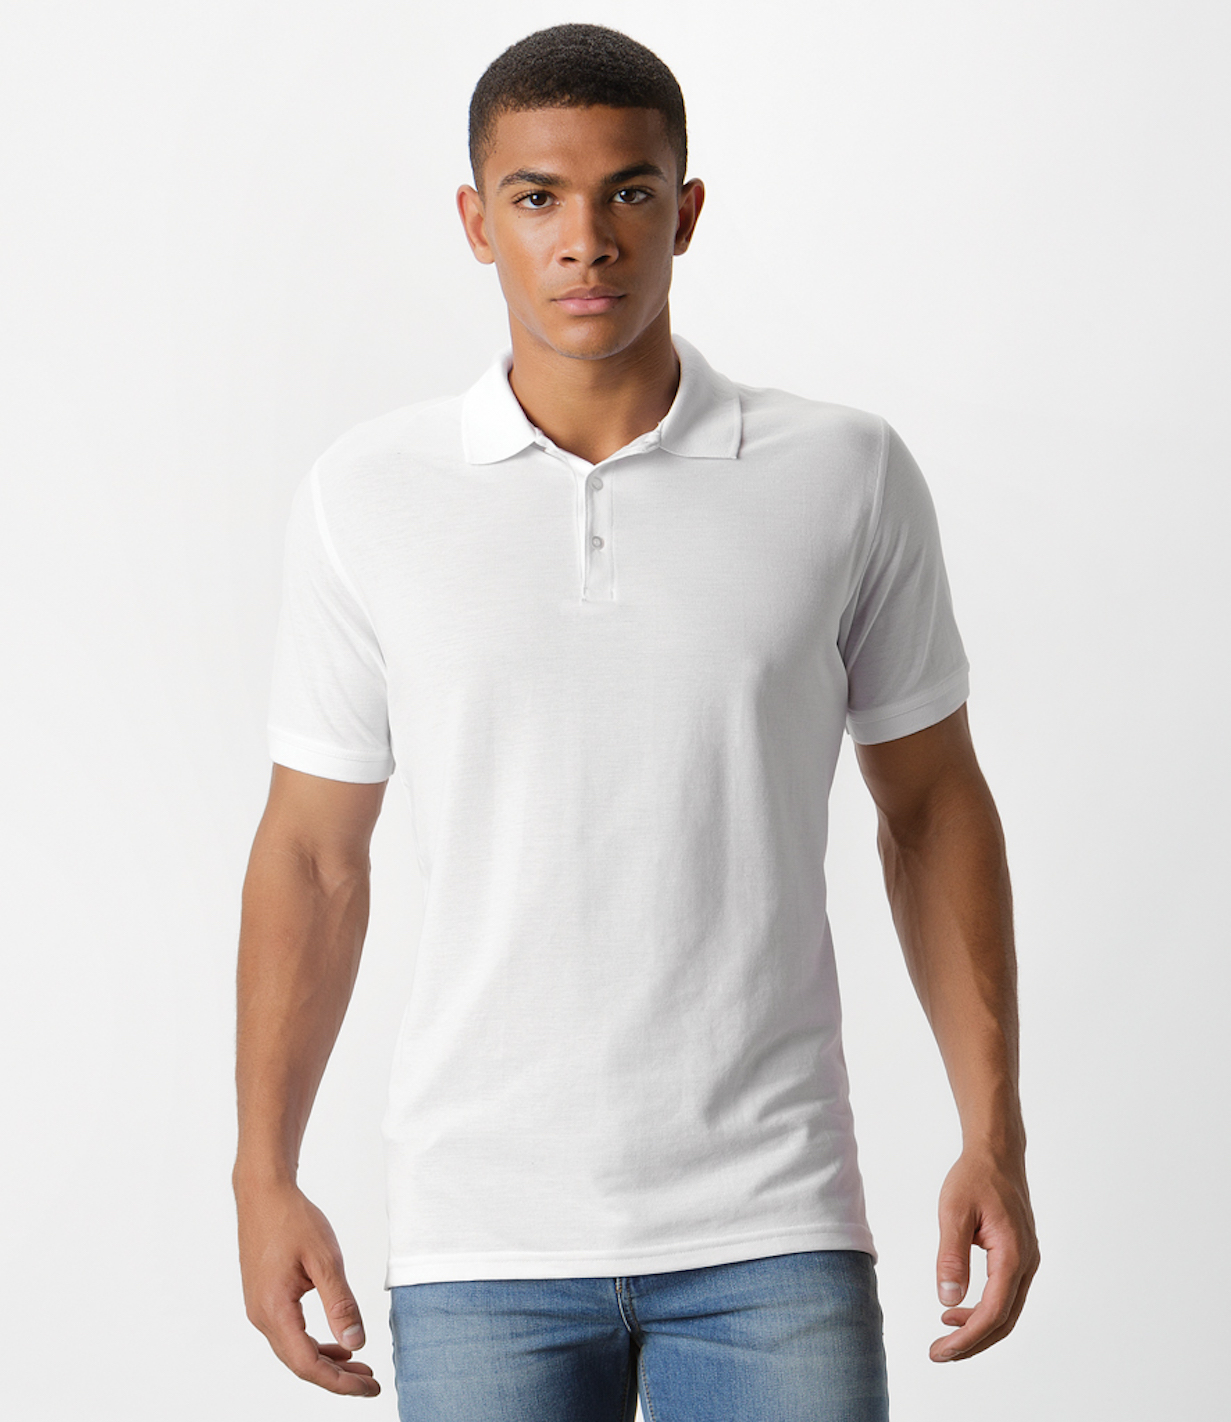 Kustom Kit Klassic Slim Fit Poly/Cotton Piqué Polo Shirt - Redrok